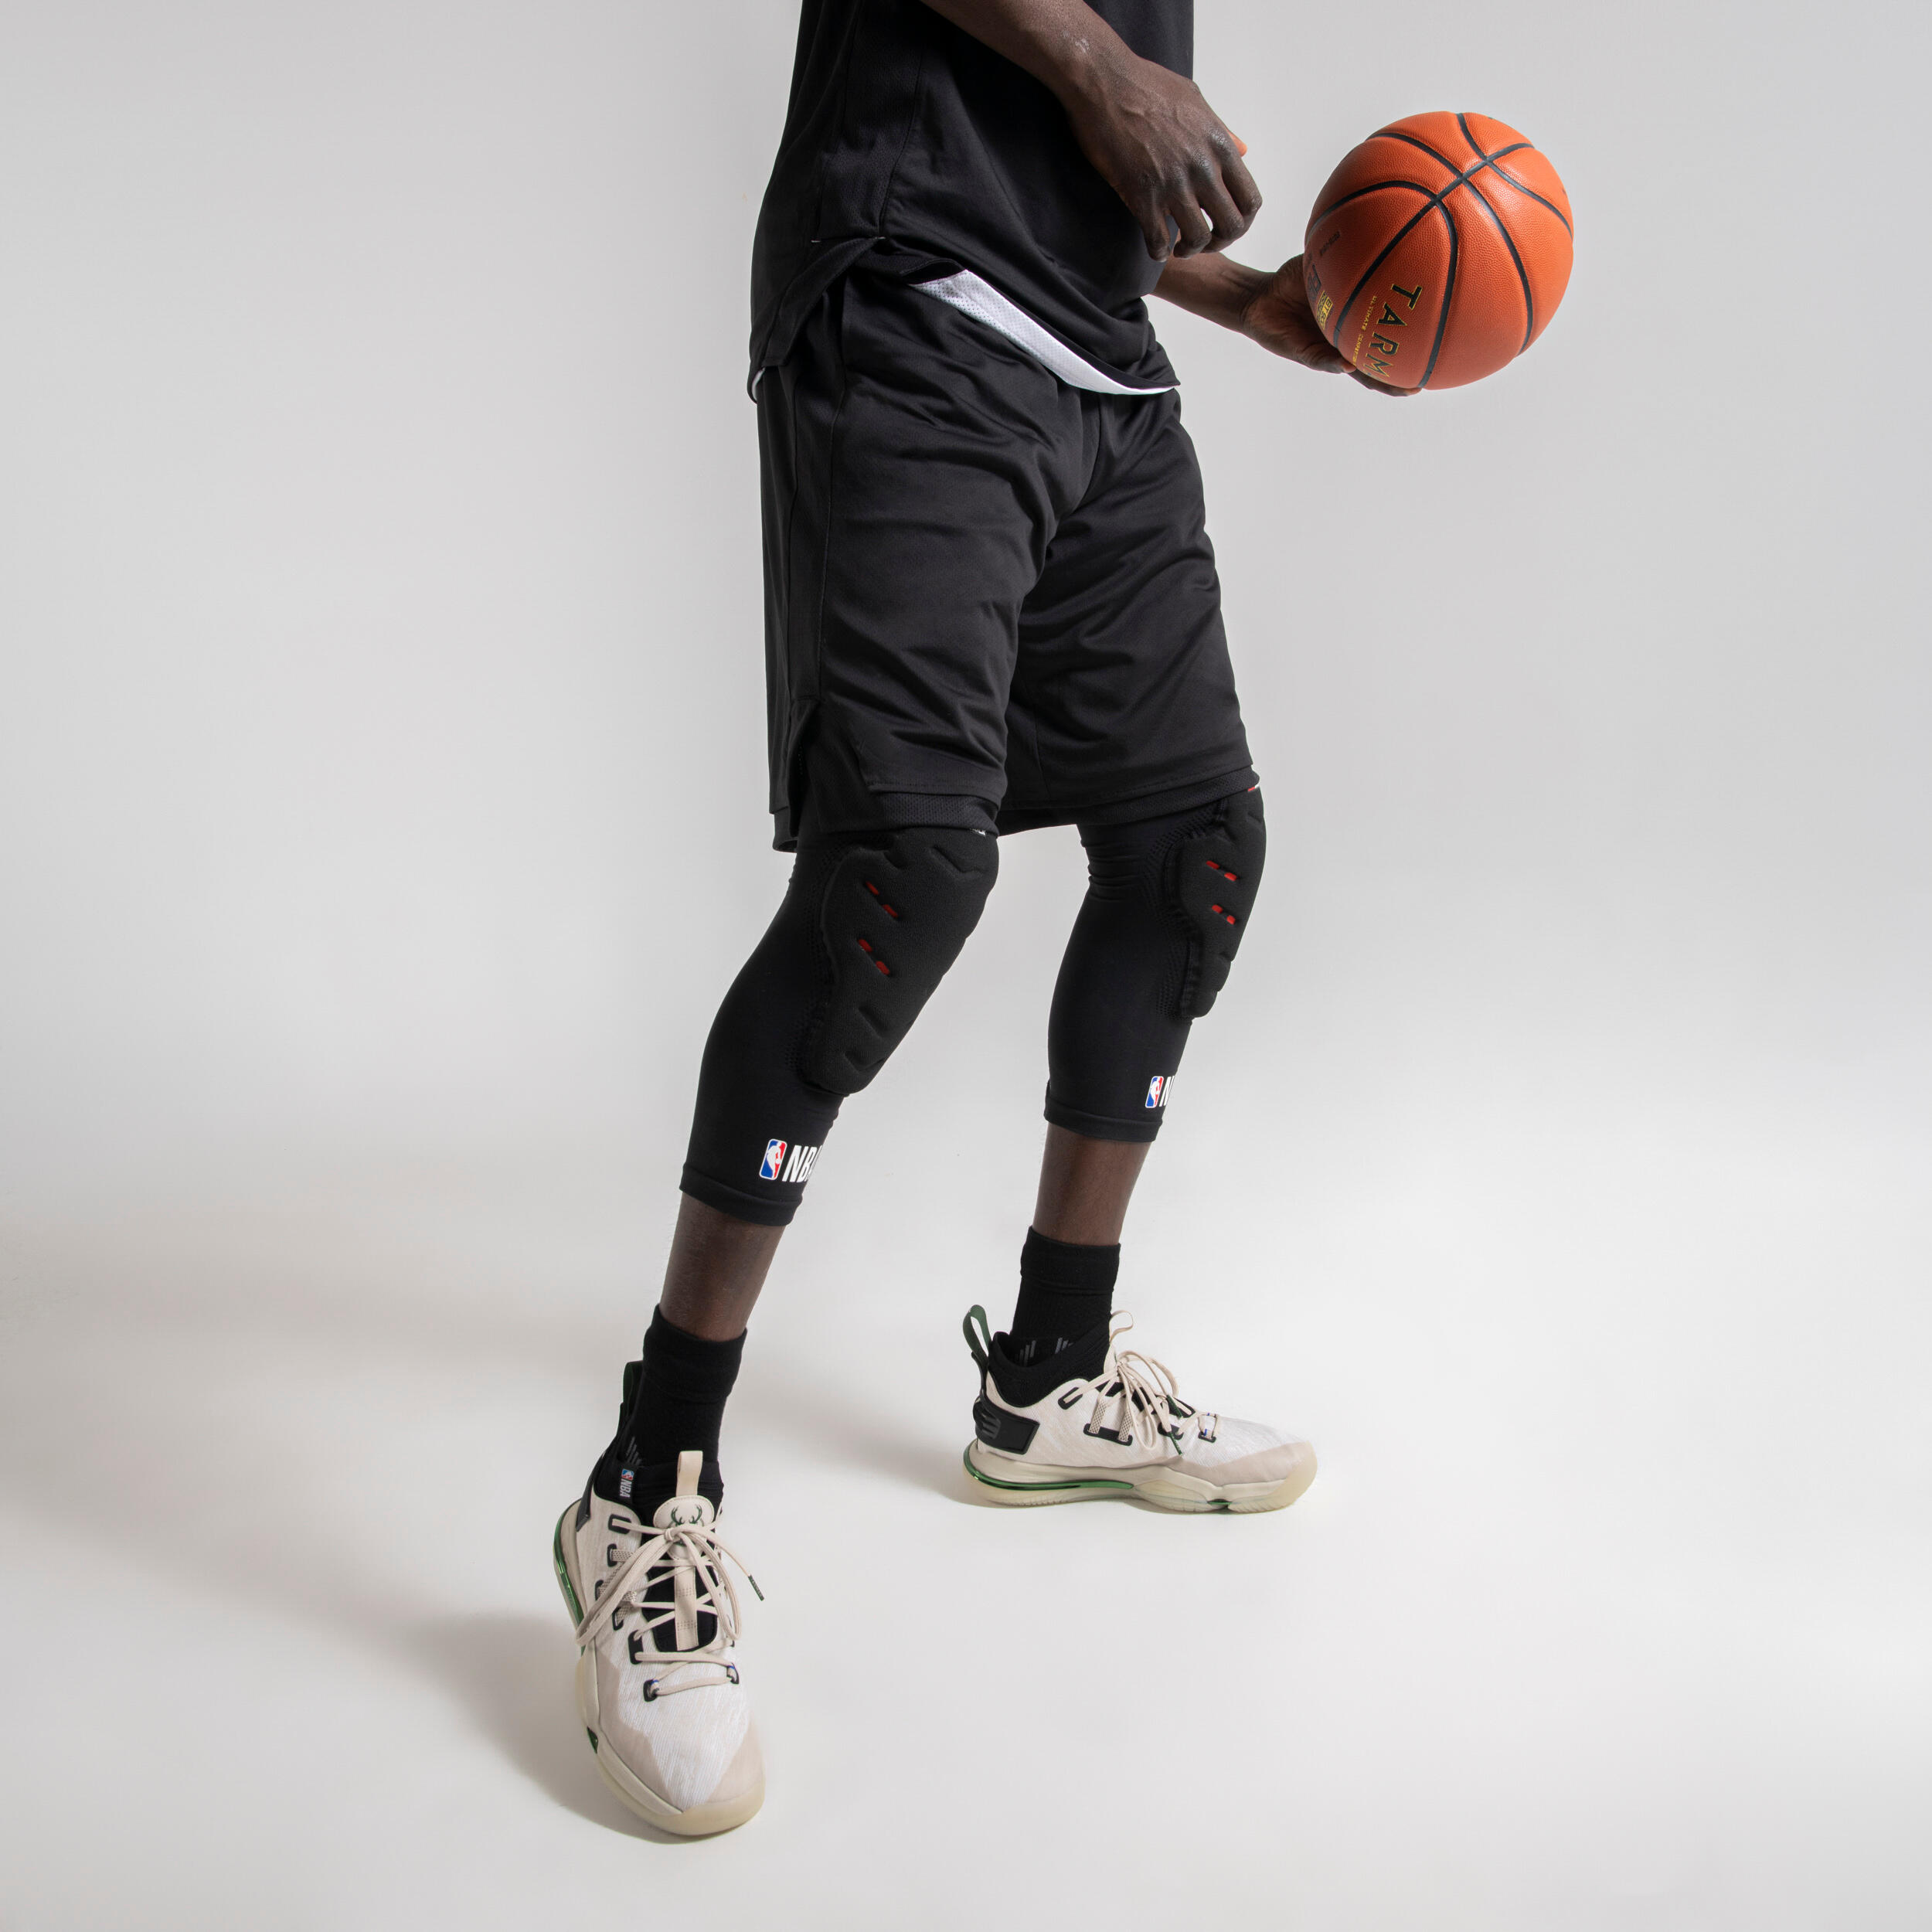 Adult Protective Basketball Knee Pads Twin-Pack - NBA 6/9